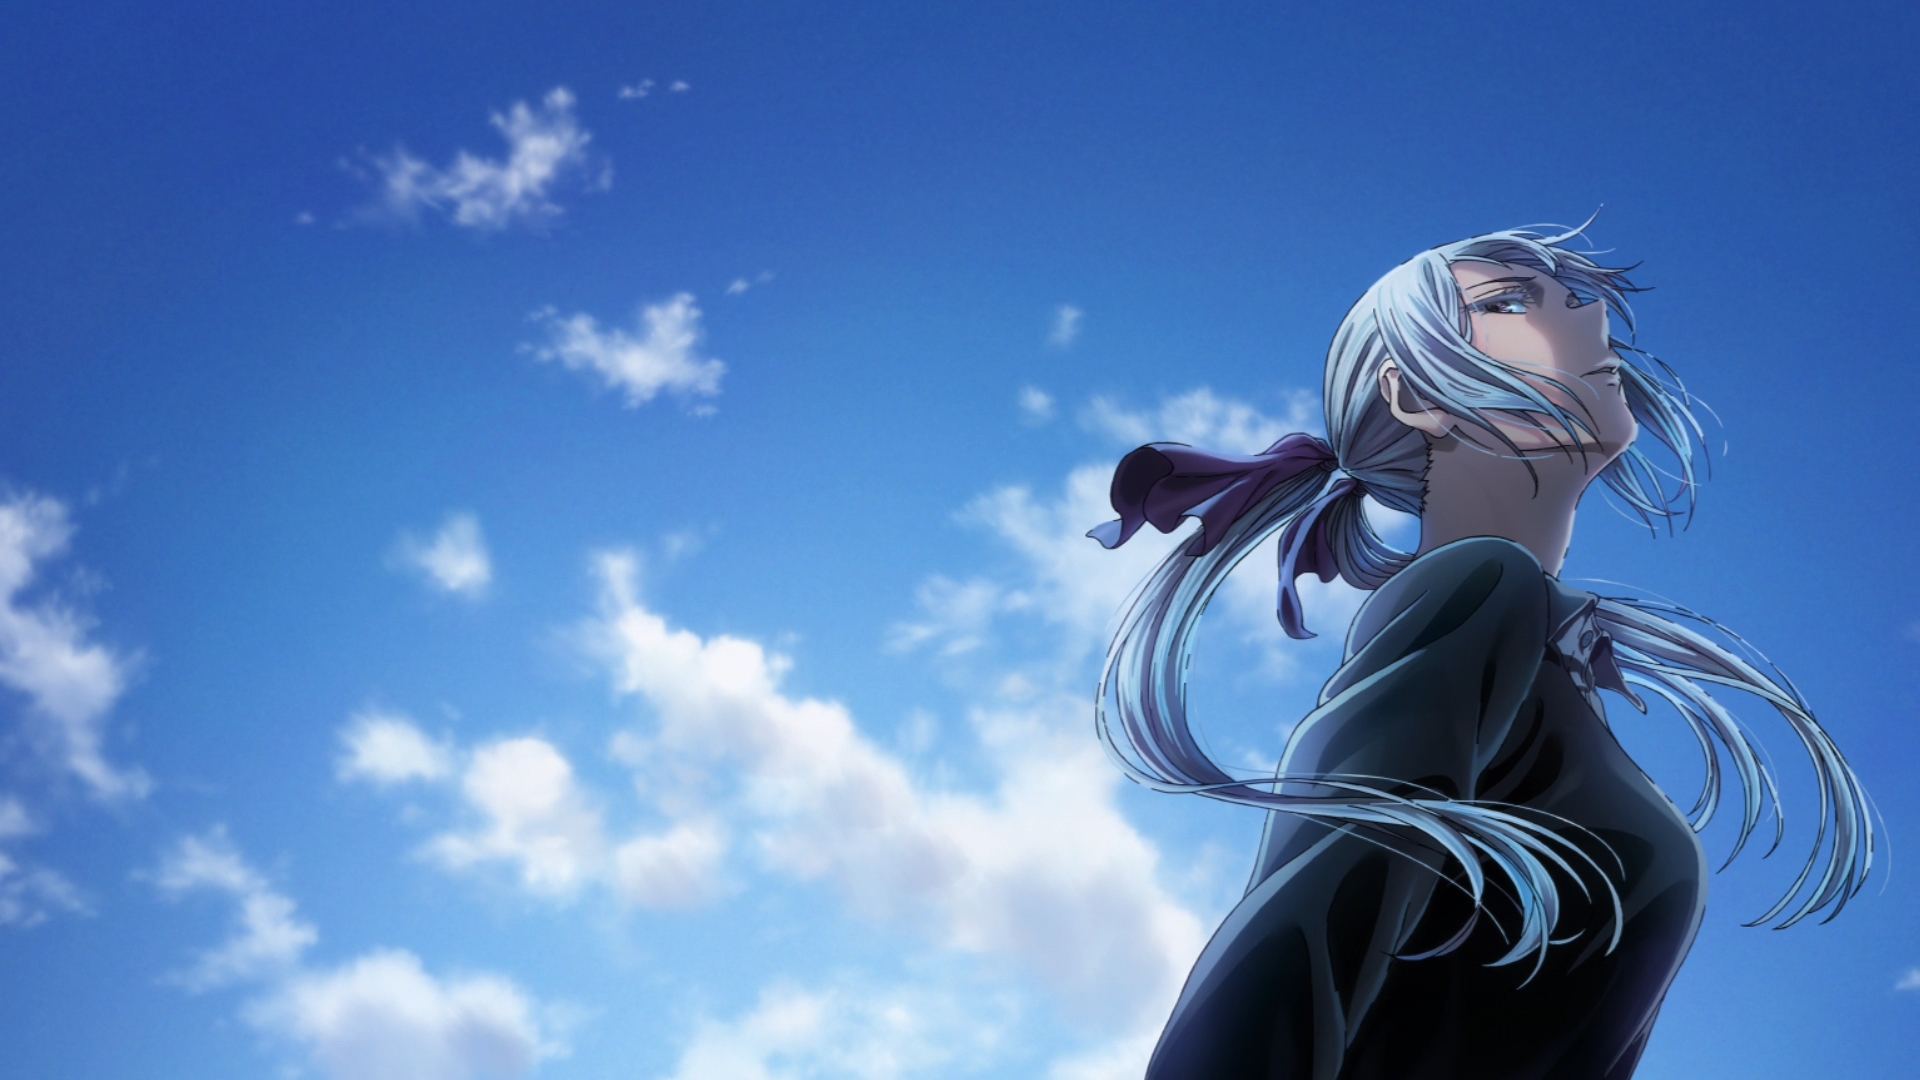 Anime 1920x1080 Mahoutsukai no Yome anime girls anime looking away twintails sky clouds